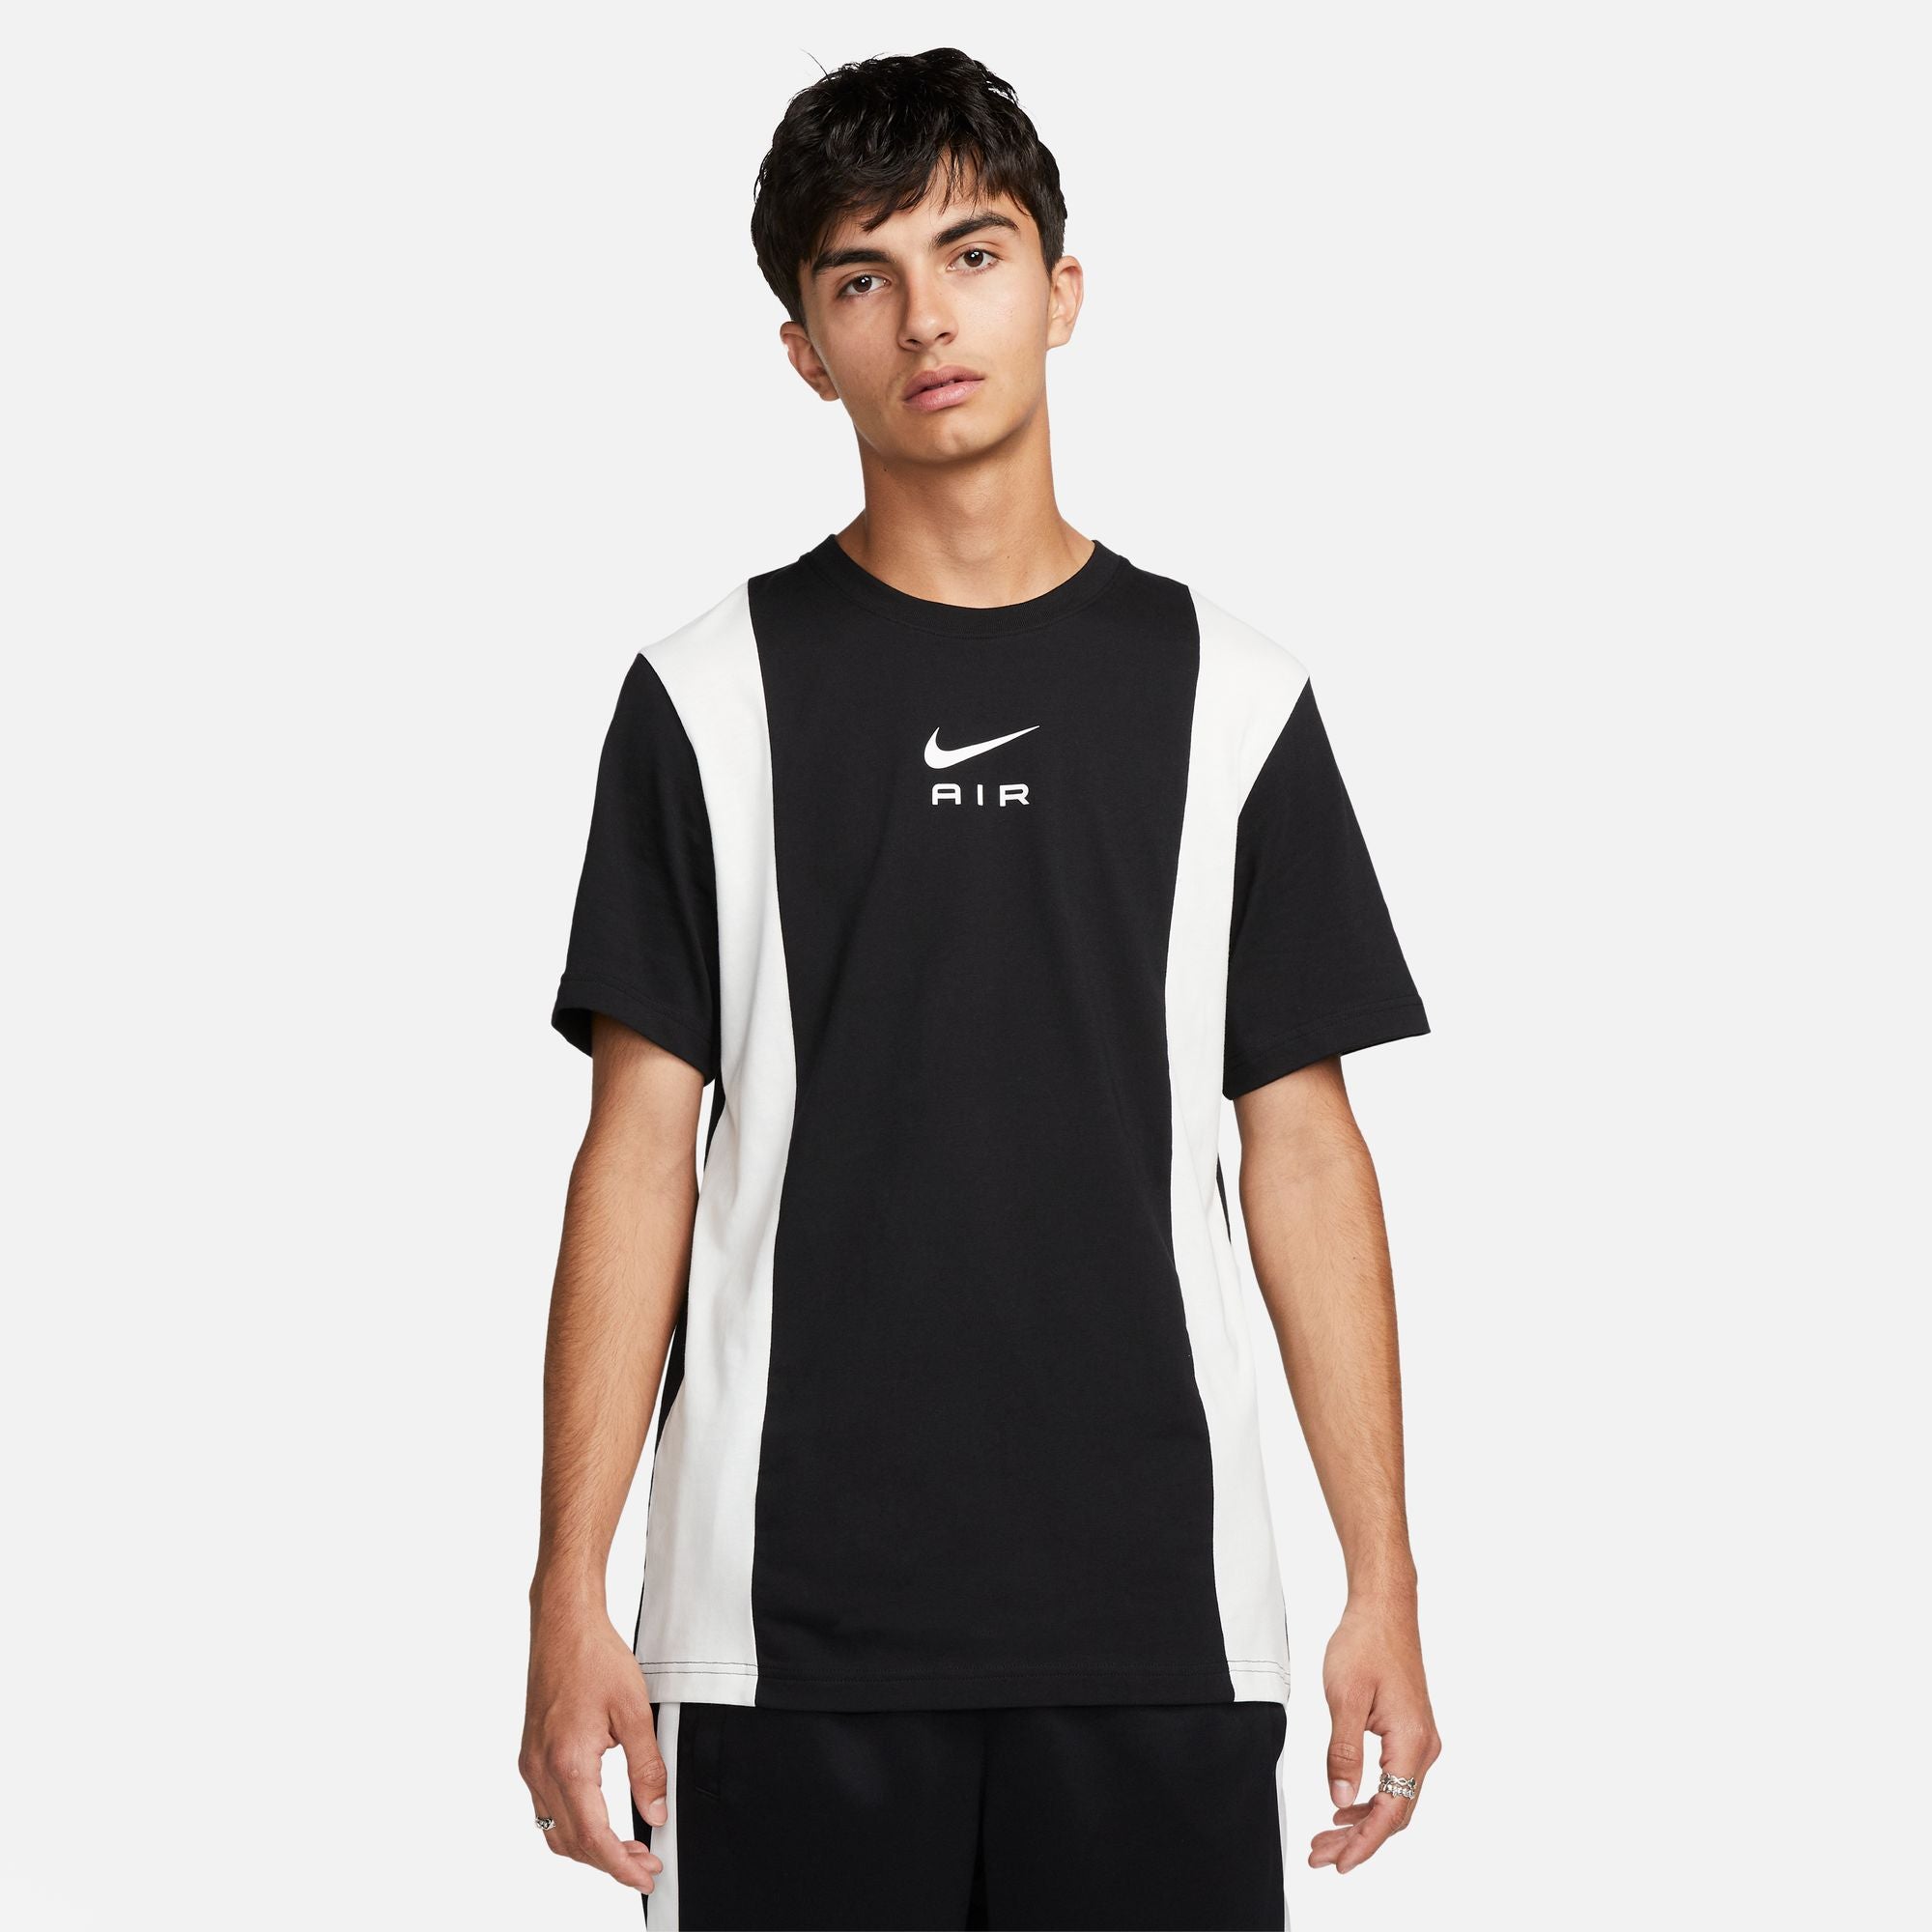 Nike Air T-Shirt - Black/White